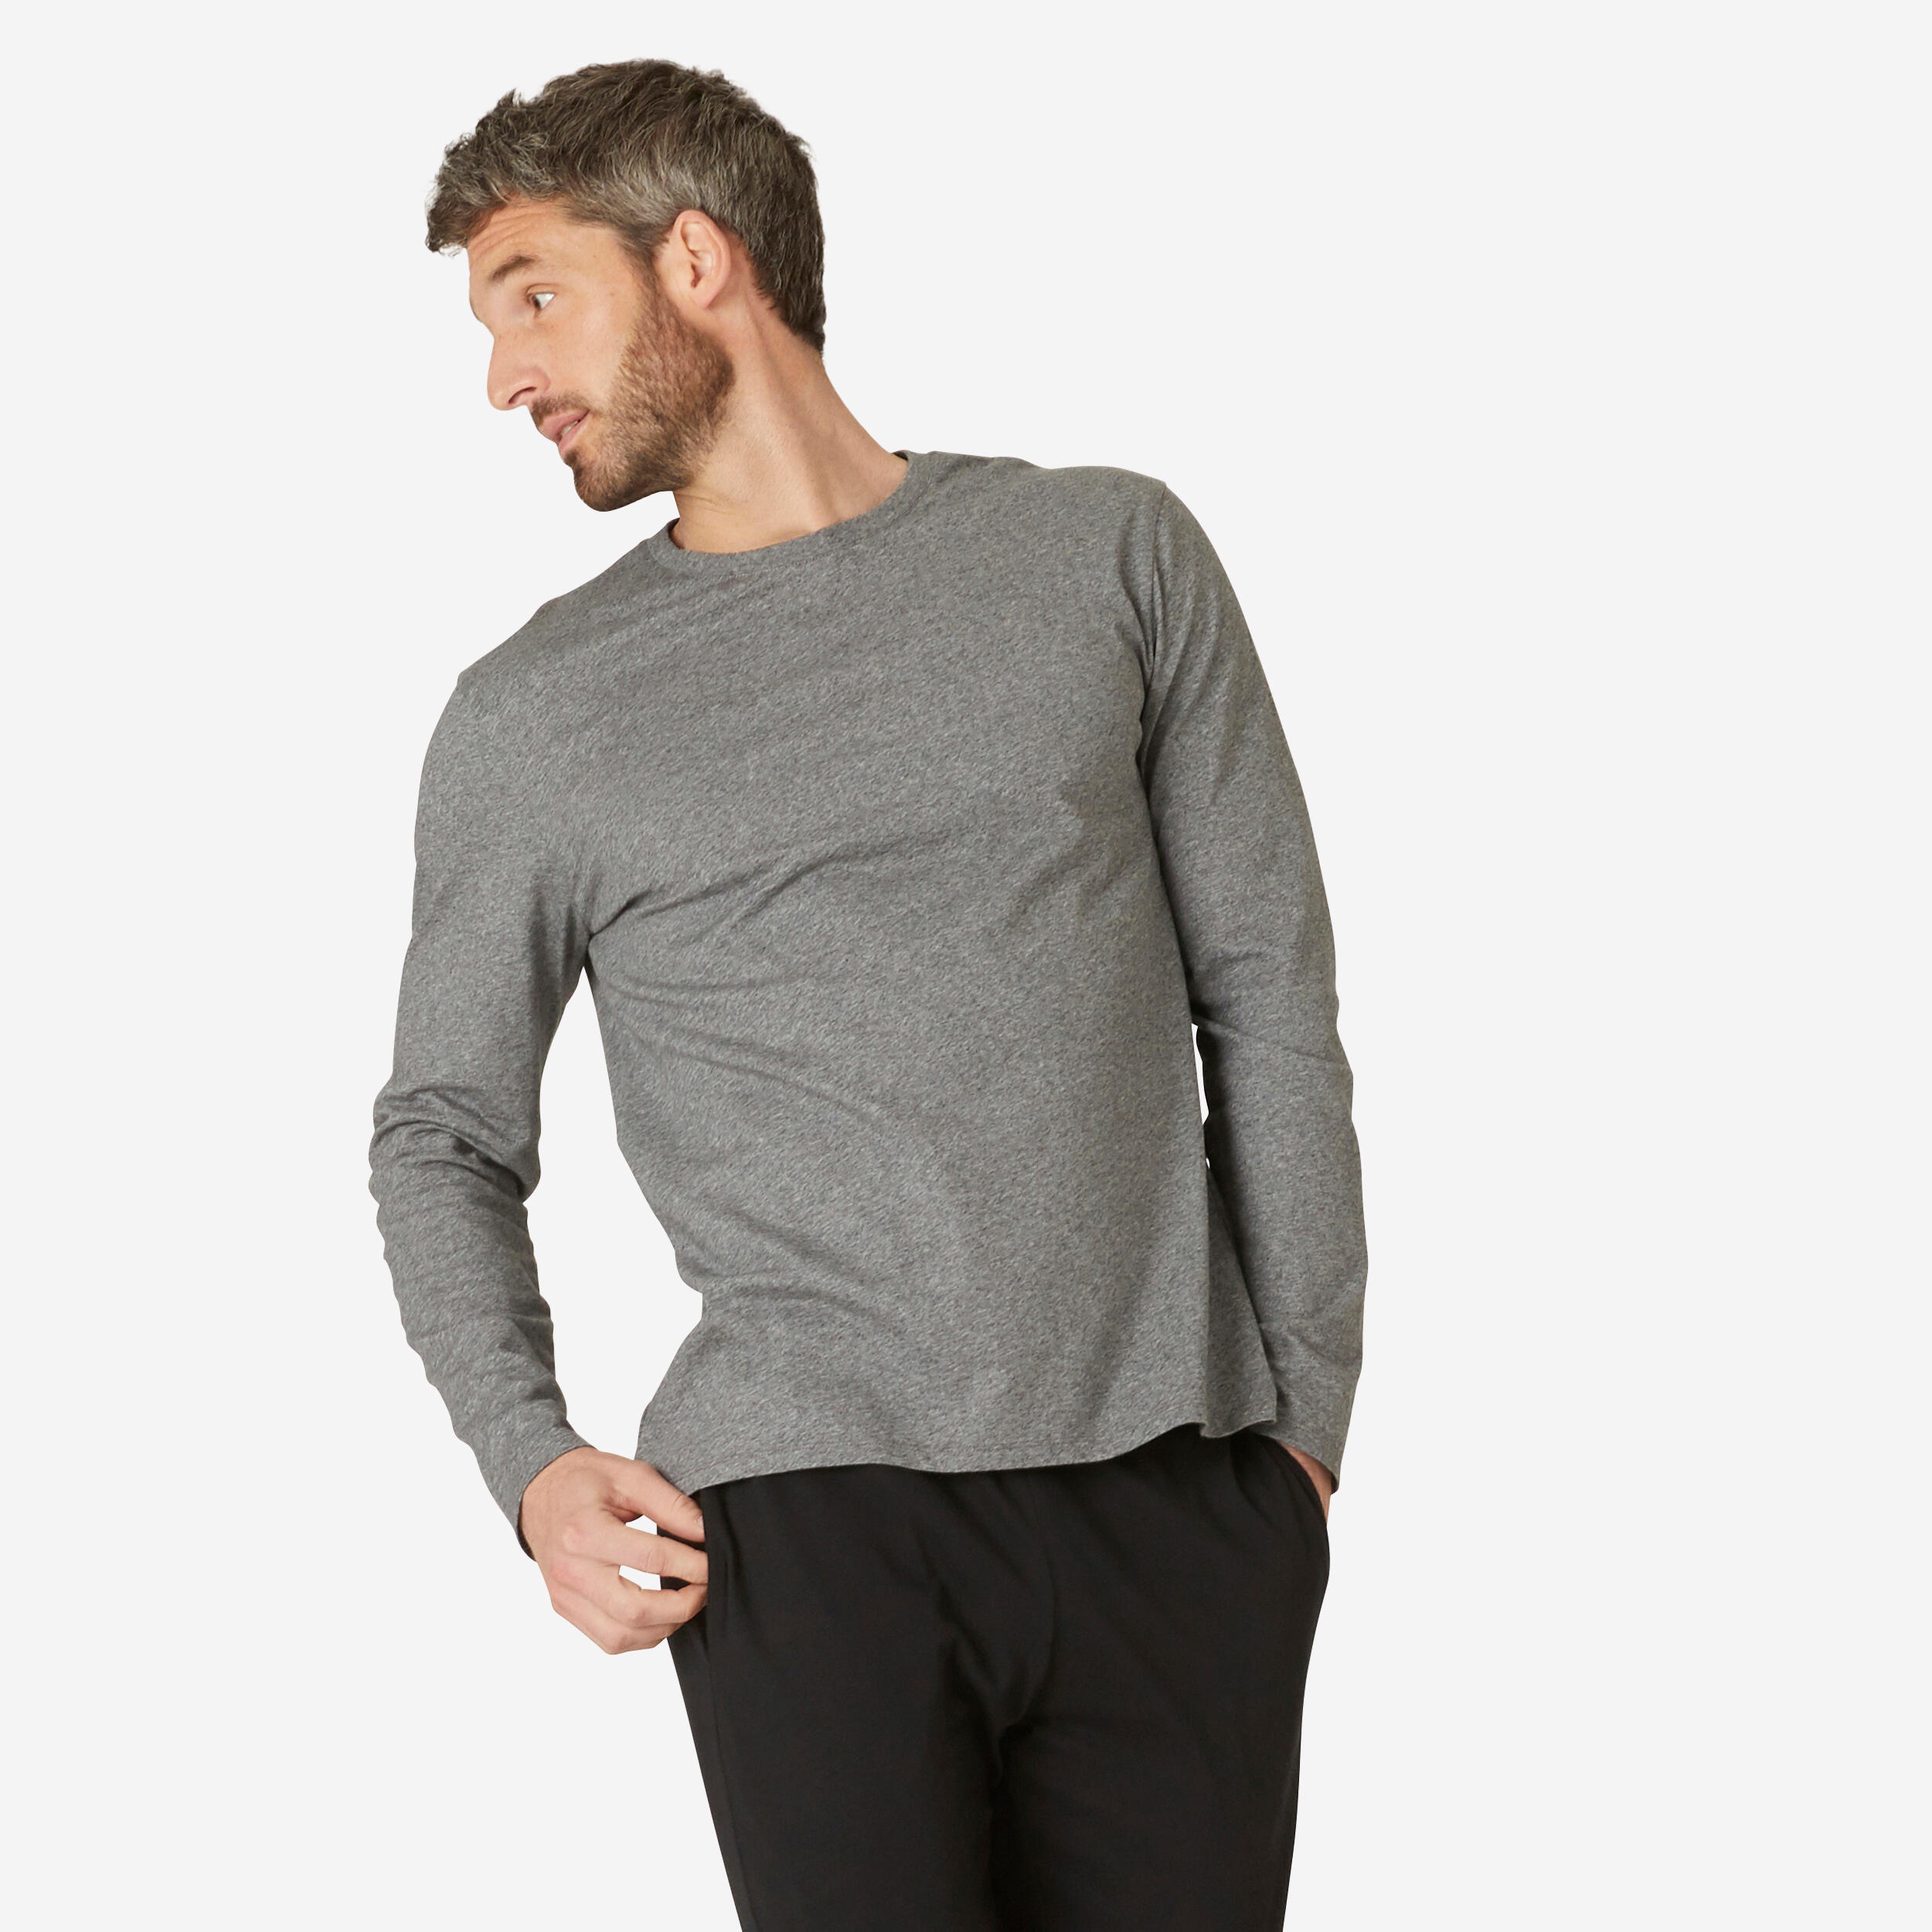 Mens Gapfit activewear gym/running long sleeved top lightweight Small grey